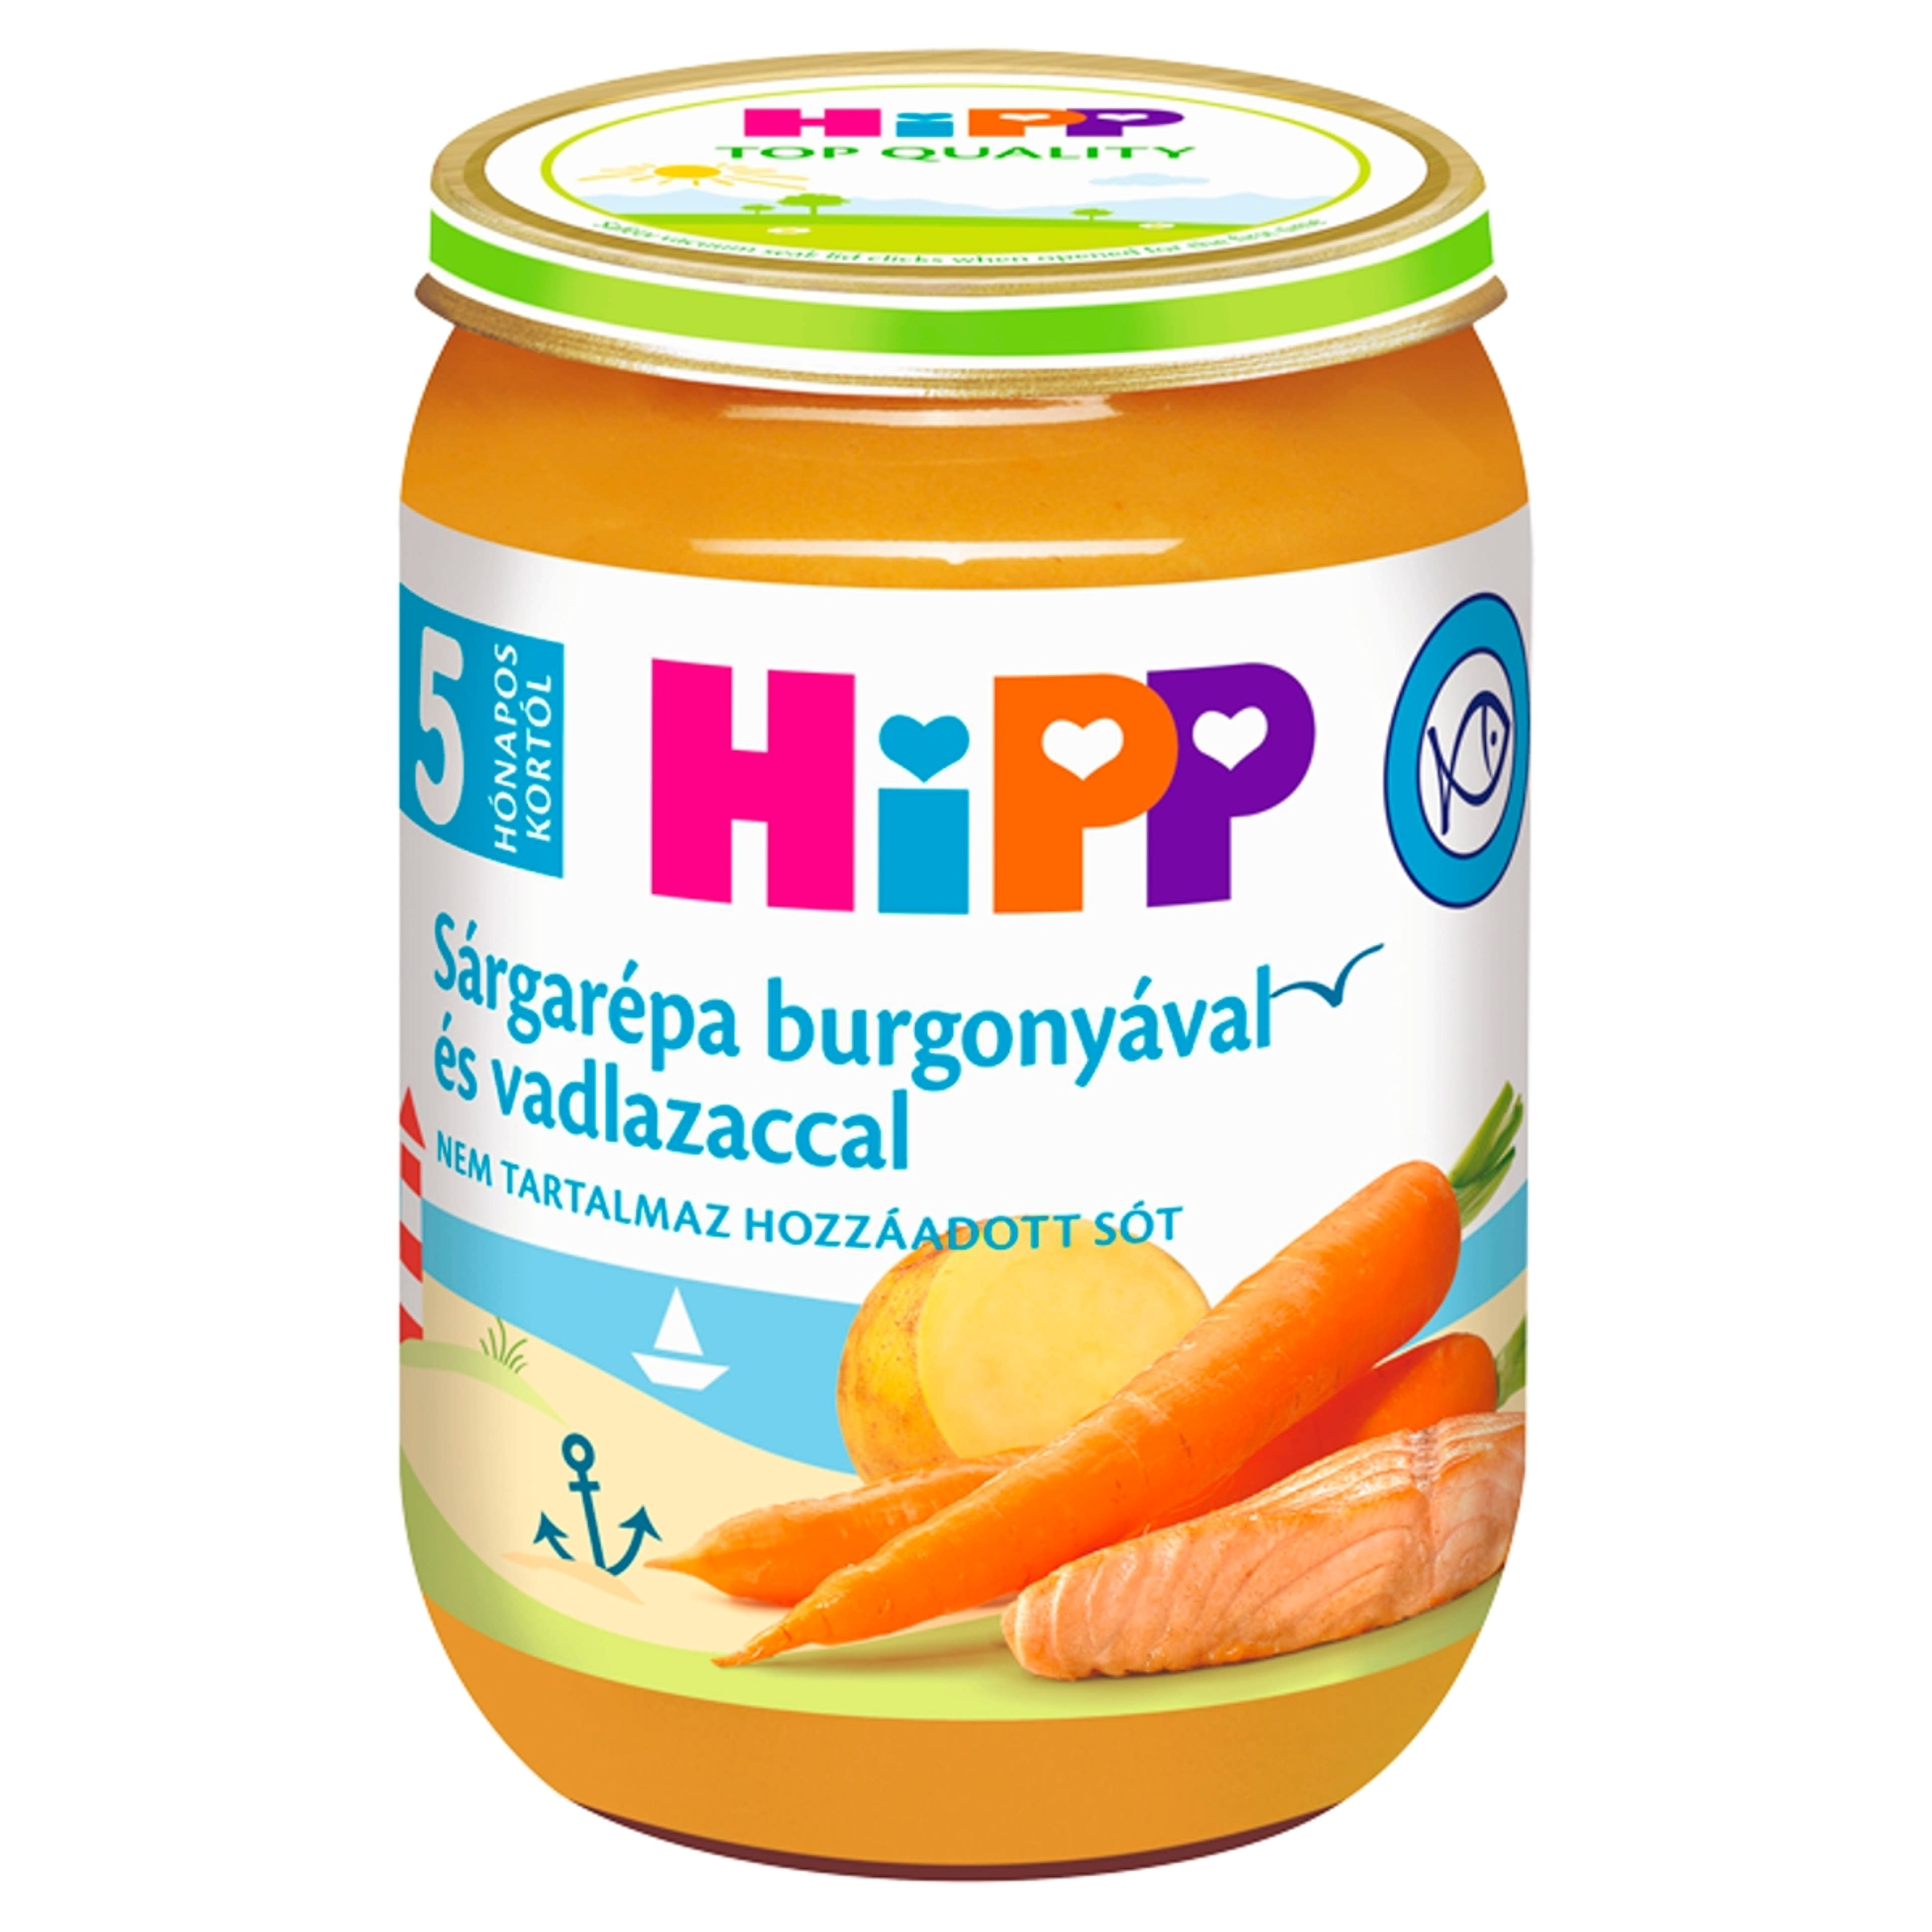 Hipp Bébiétel Sárgarépa Burgonya Vadlazaccal 5 Hónapos Kortól - 190 g-1